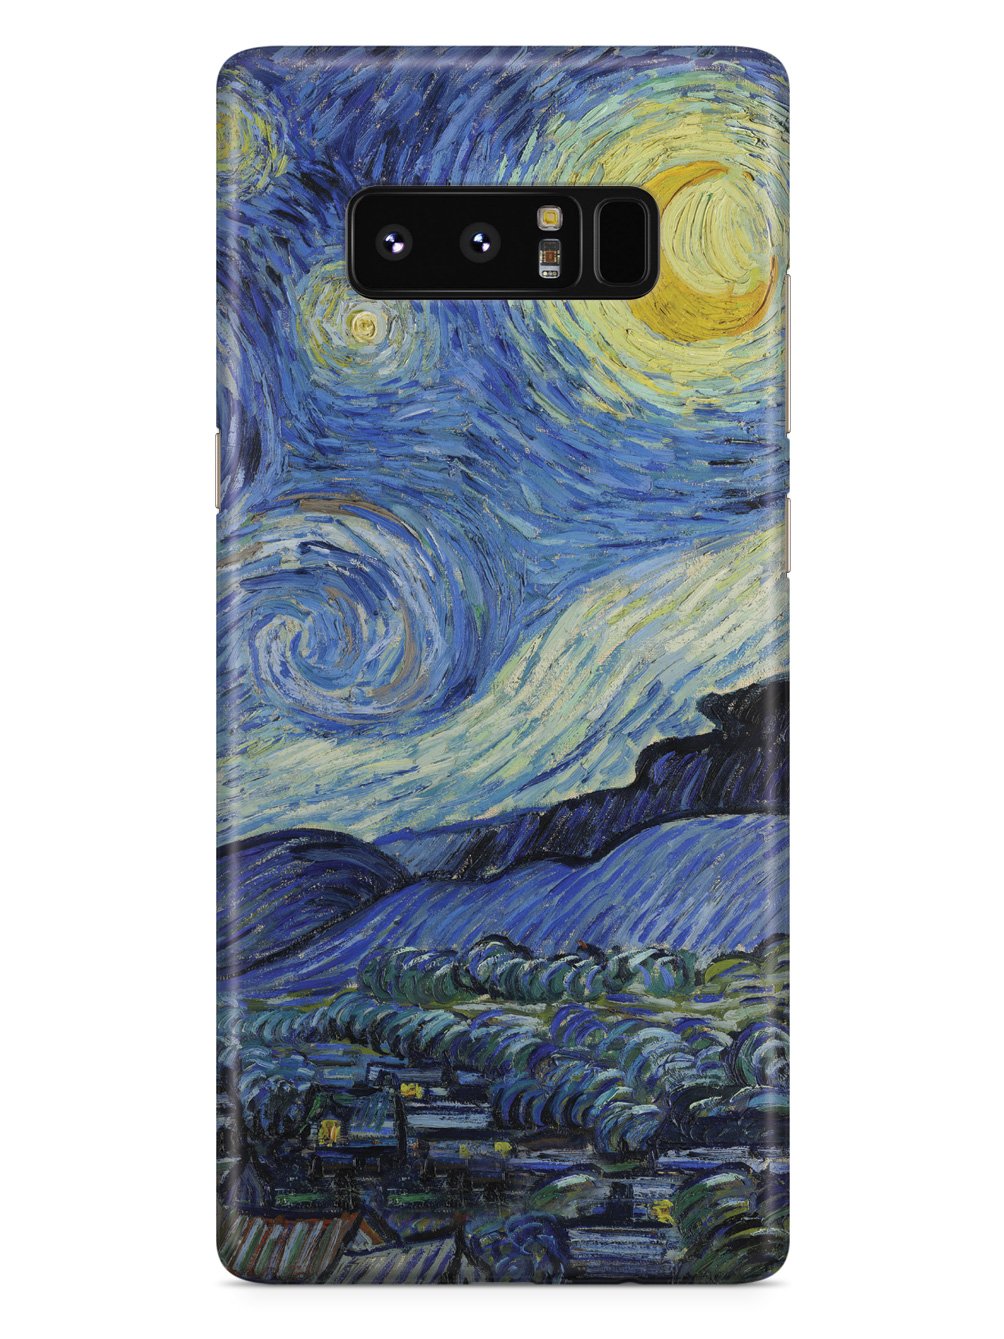 Vincent van Gogh - Starry Night Case